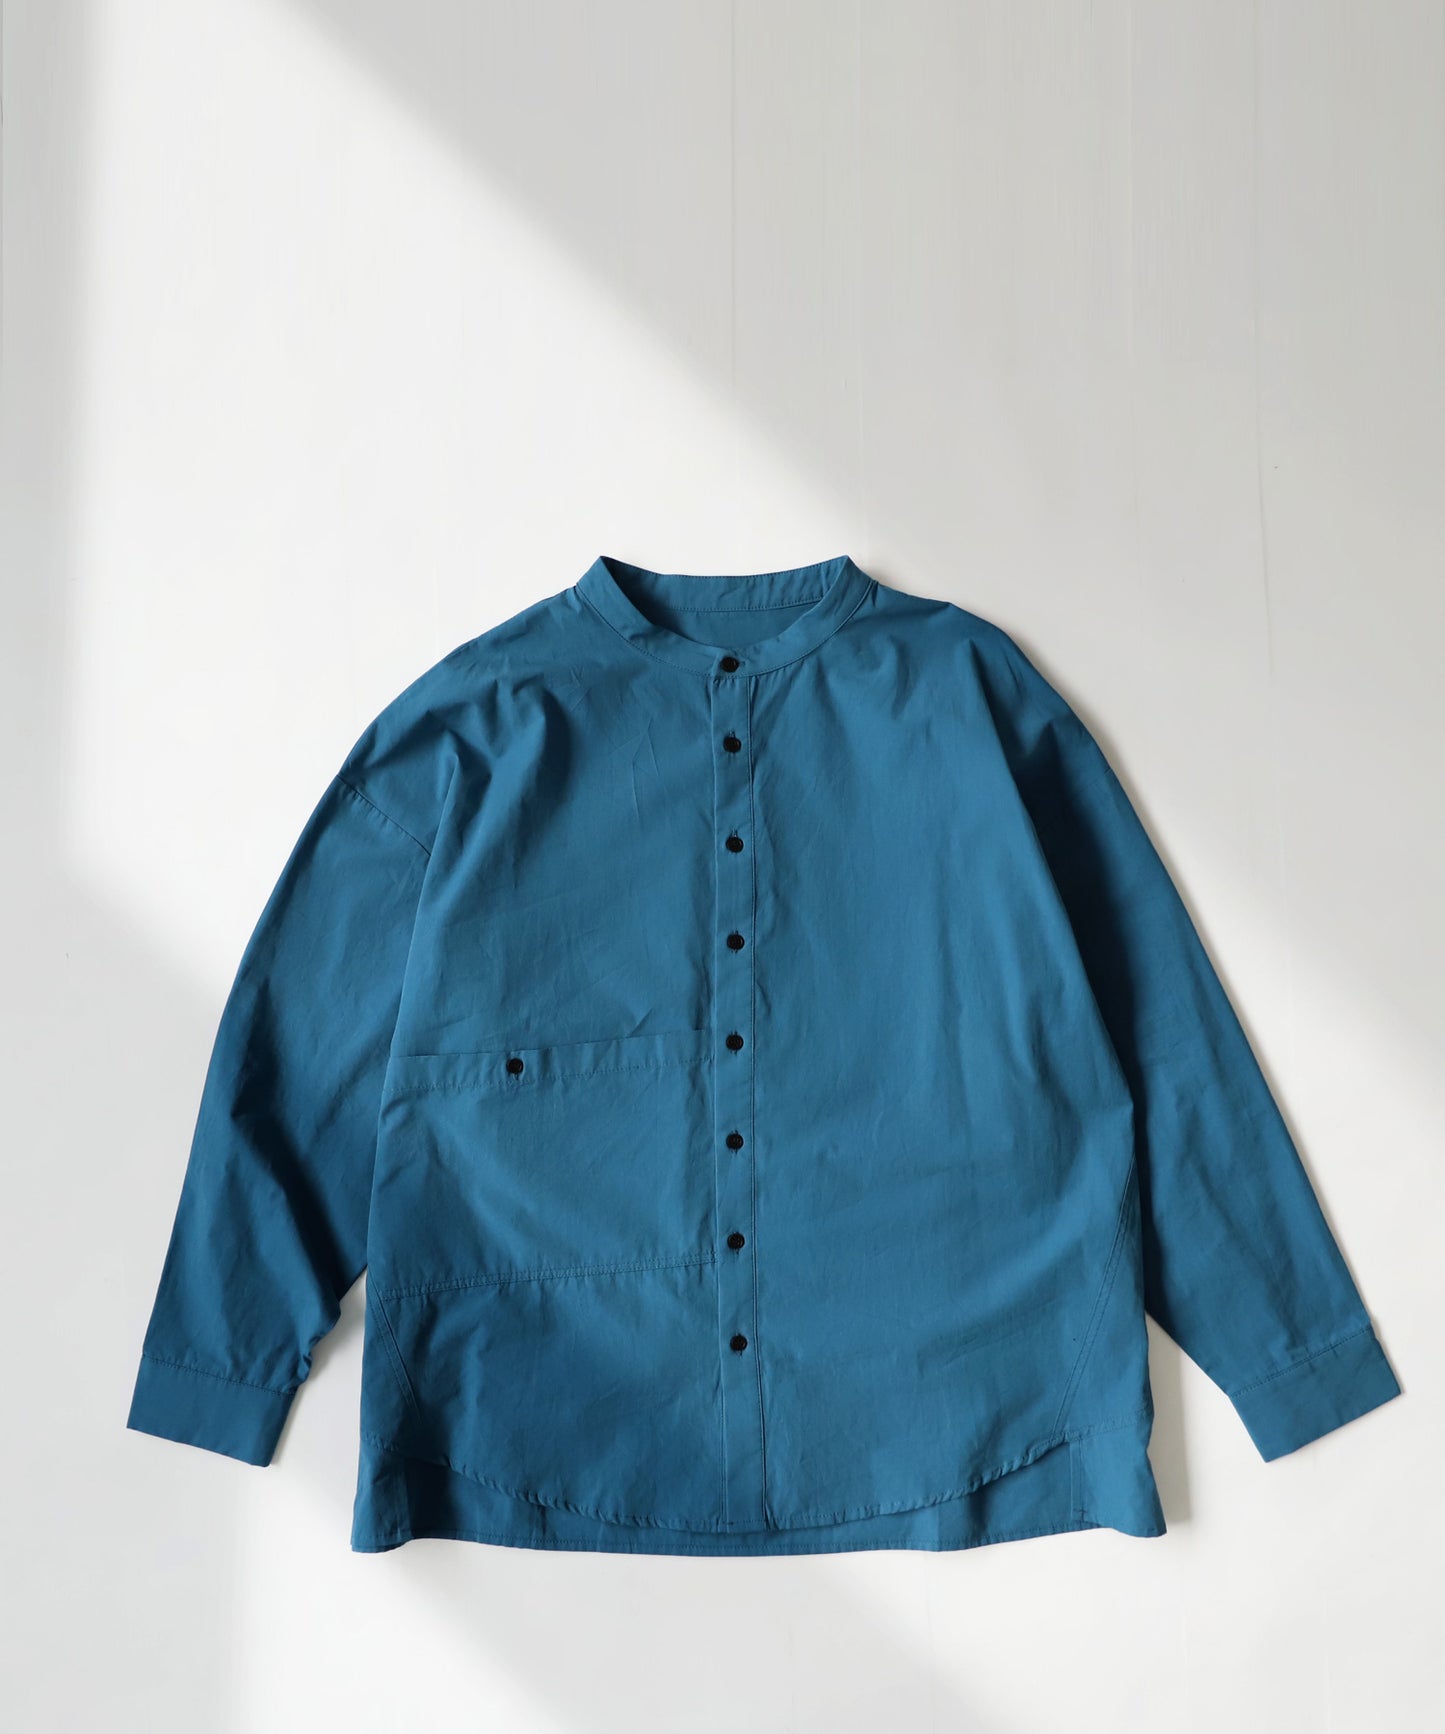 Design Pocket Men's Shirt Tops